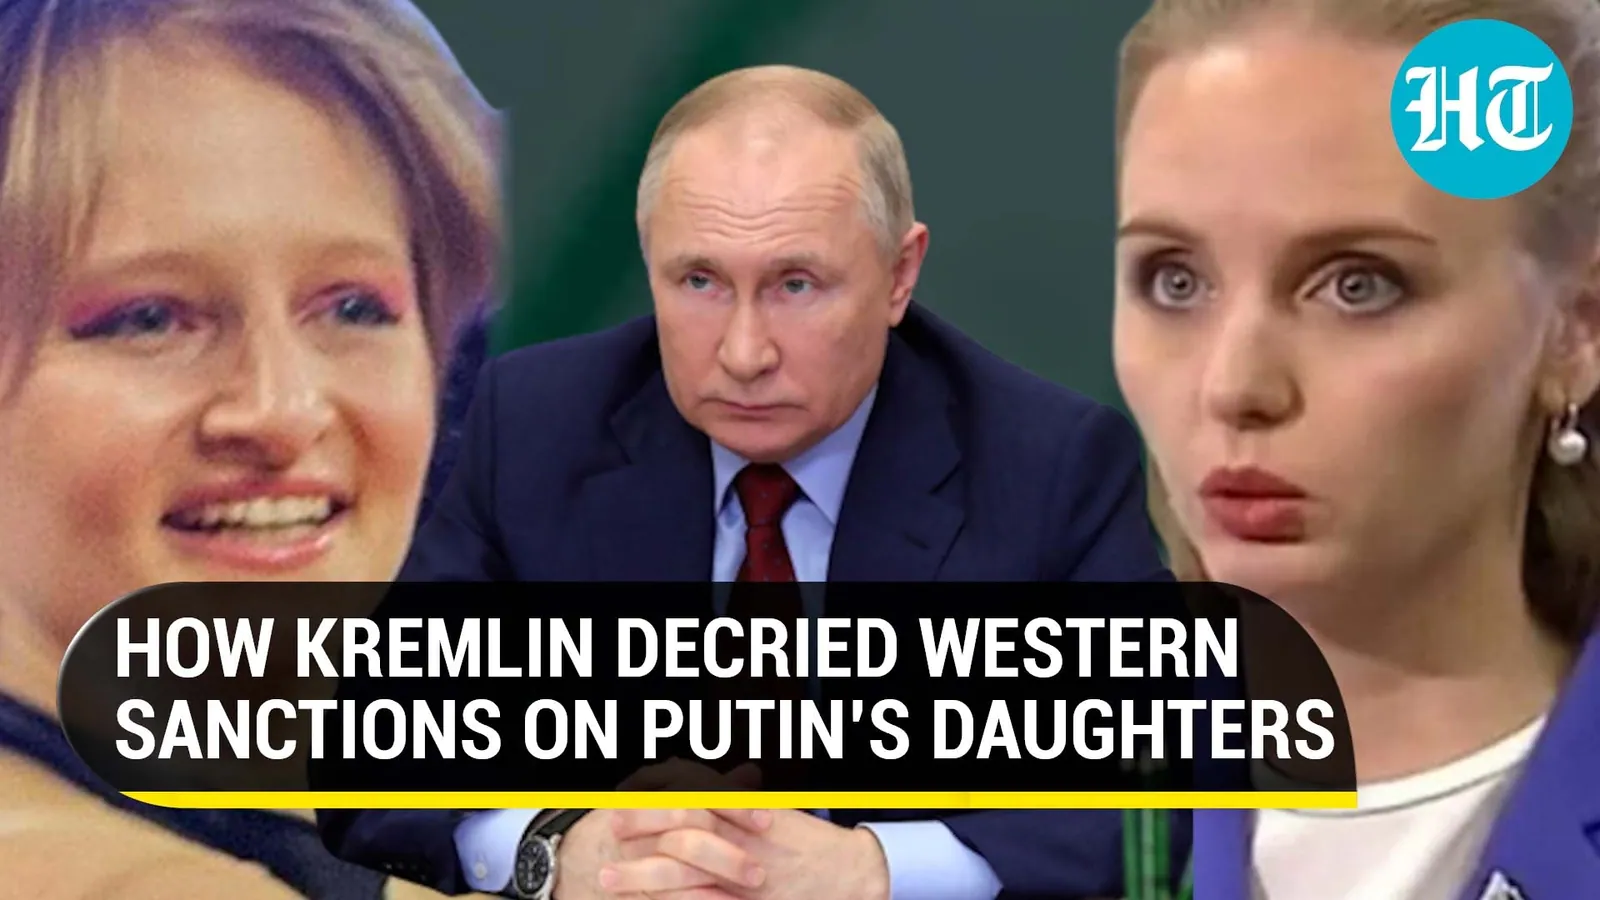 ‘Western frenzy’: How Russia decried Biden govt’s sanctions on Putin’s daughters